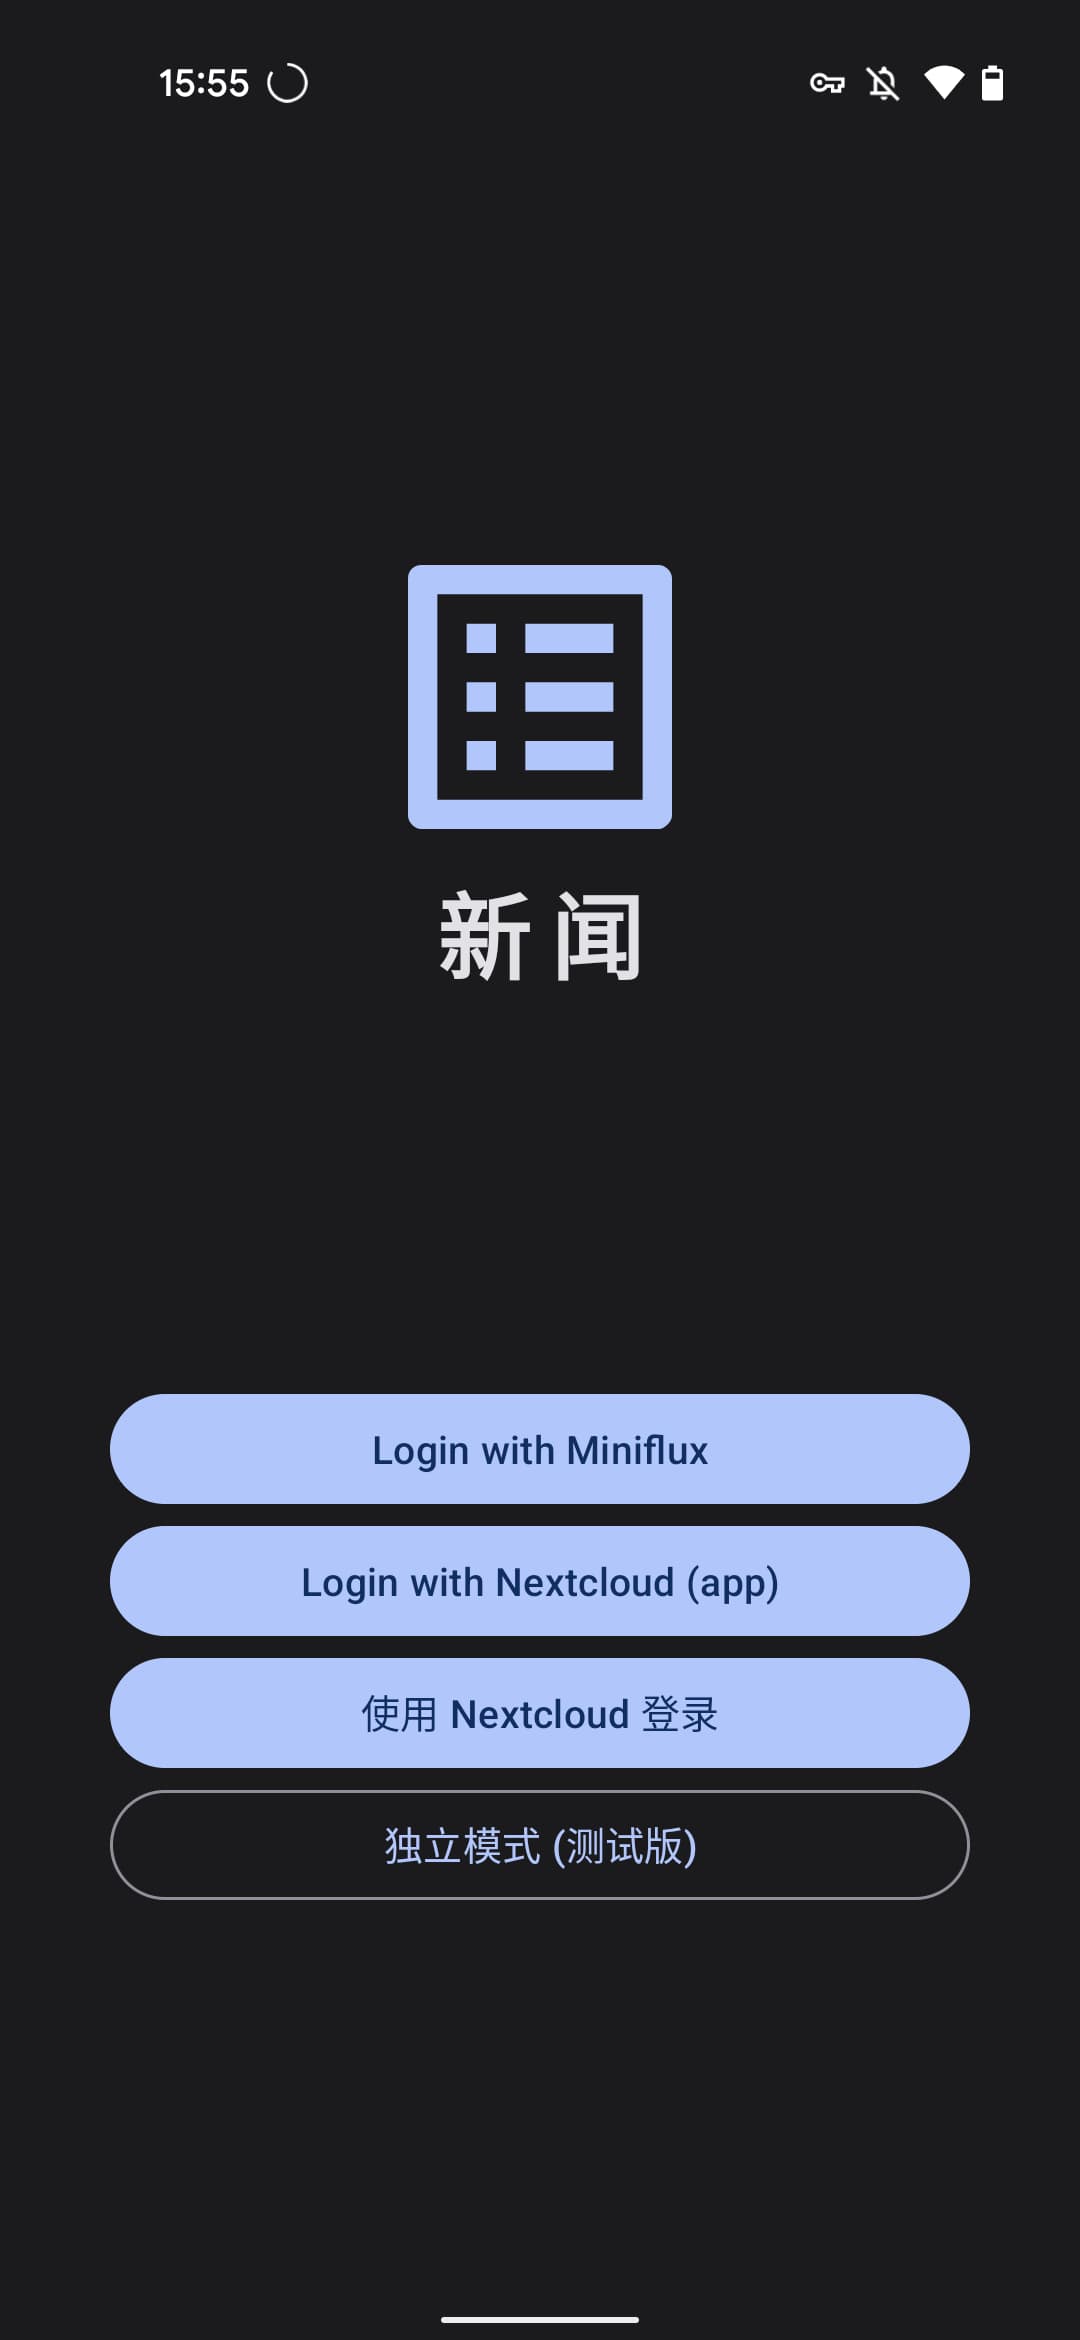 News - 支持 Miniflux 和 Nextcloud 的 RSS 阅读器[Android] 1